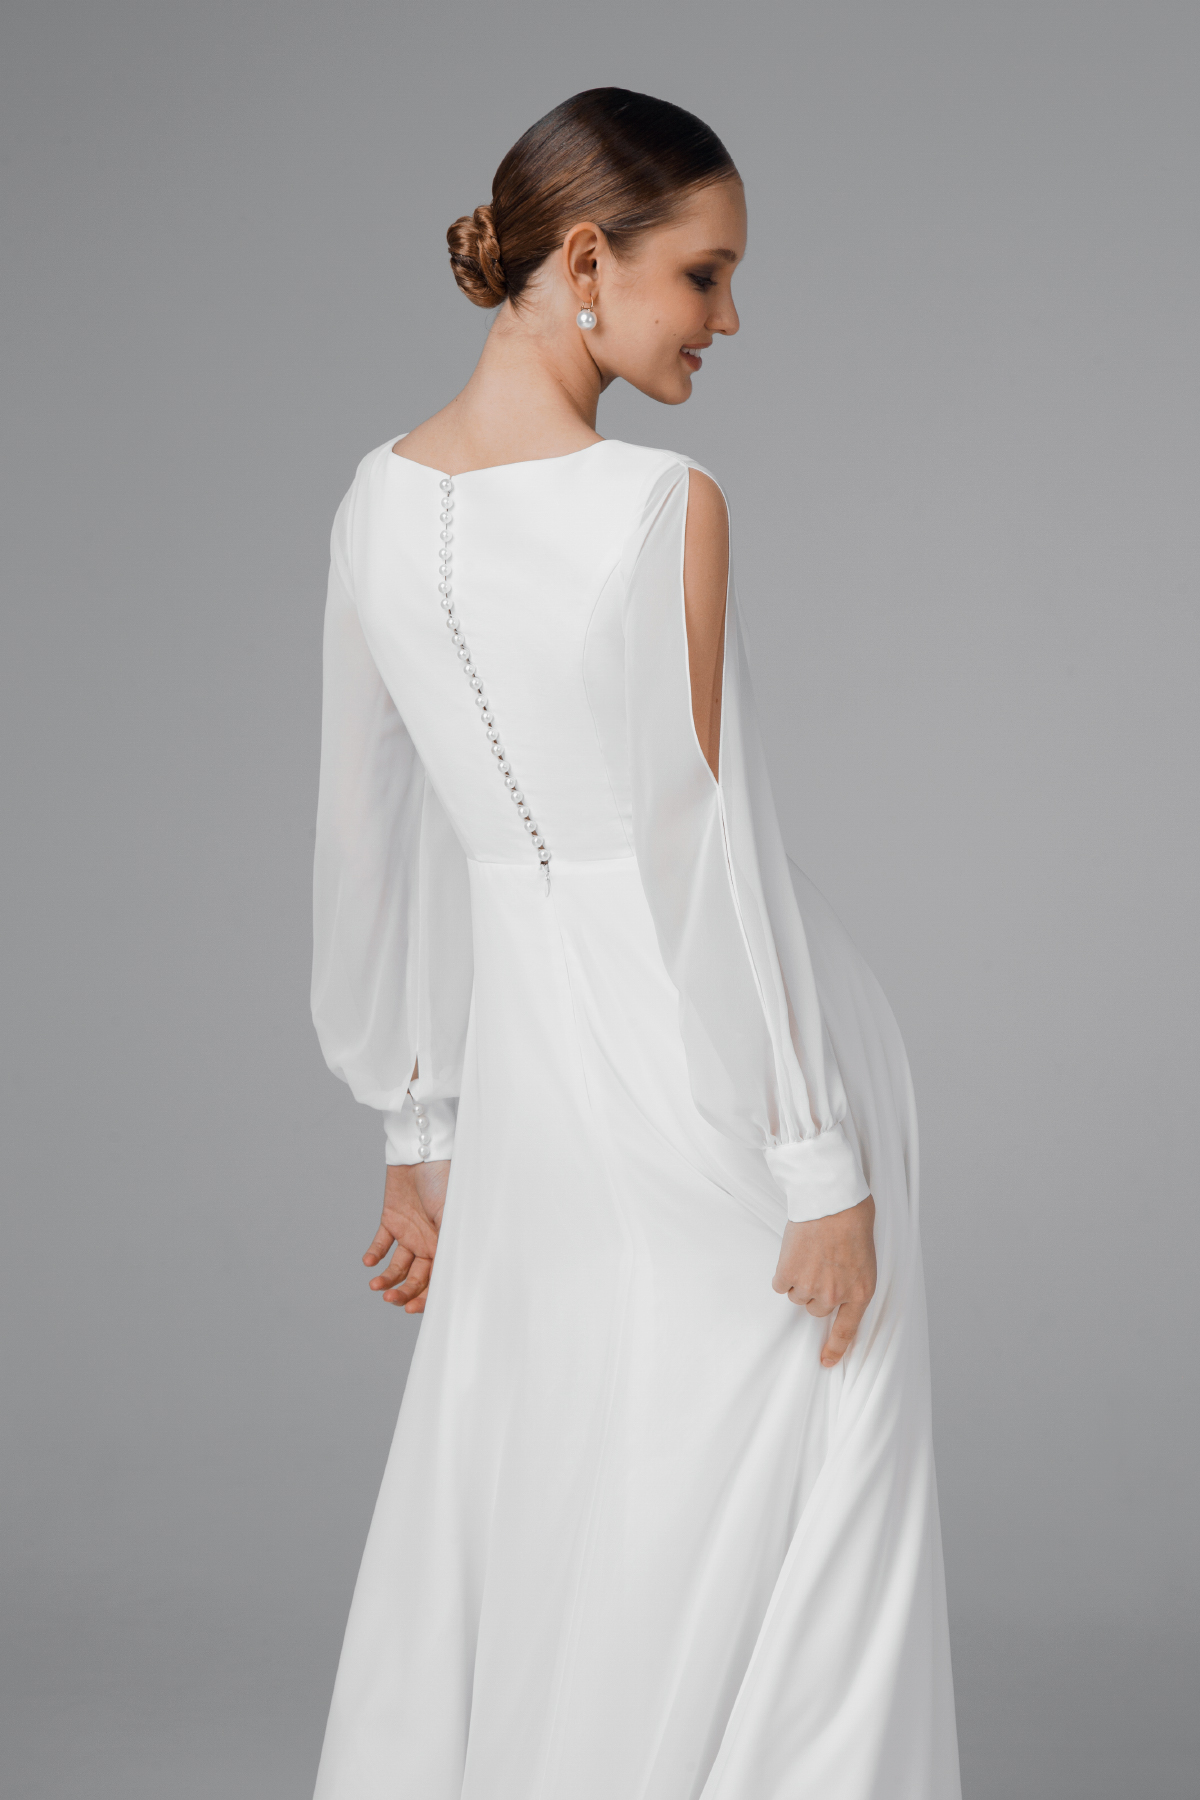 Simple and elegant wedding dress